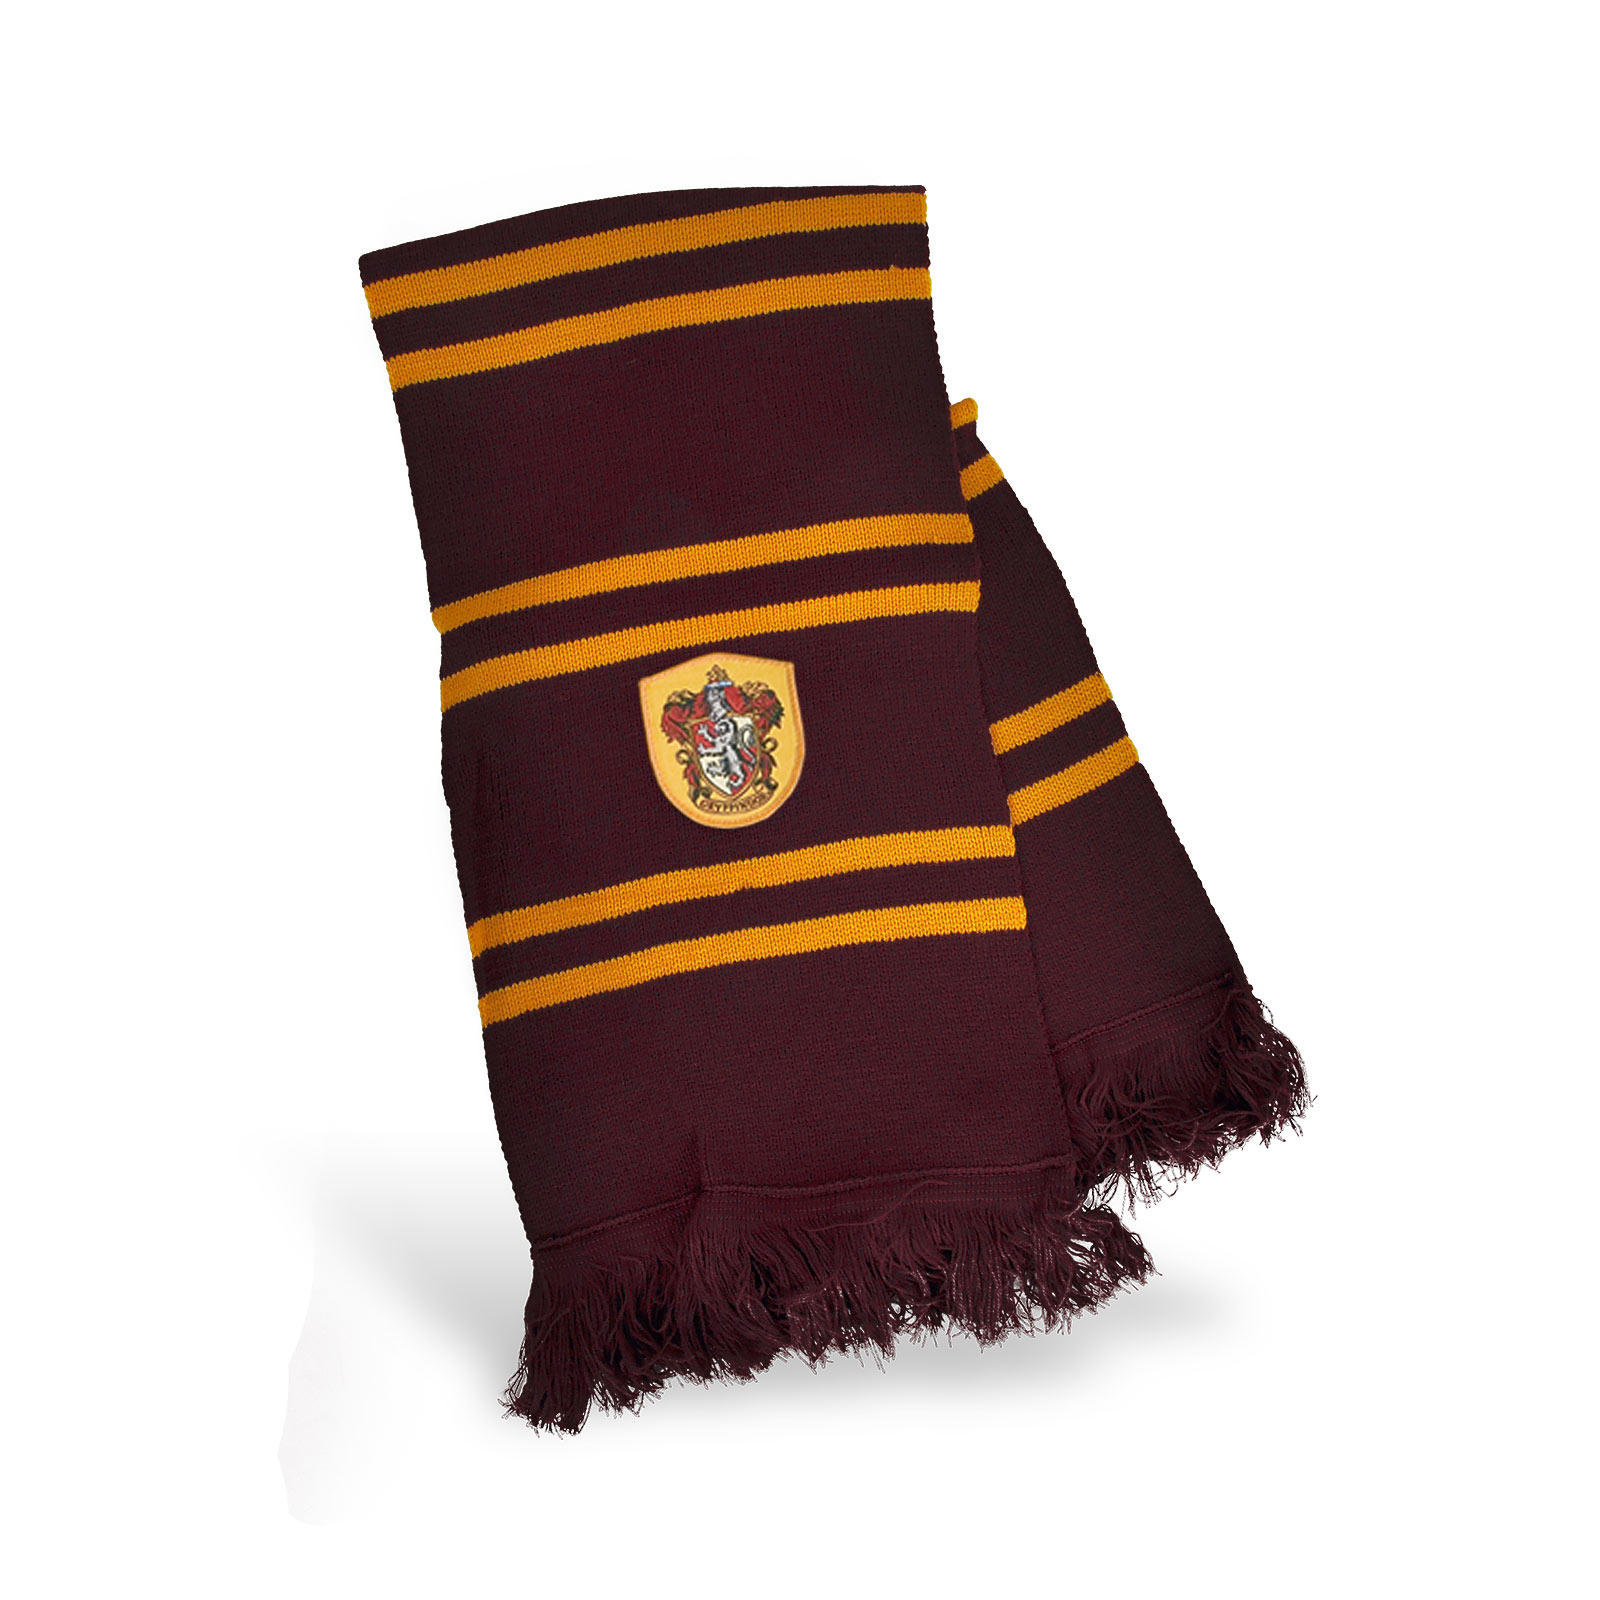 Harry Potter - Gryffindor Schal mit Emblem